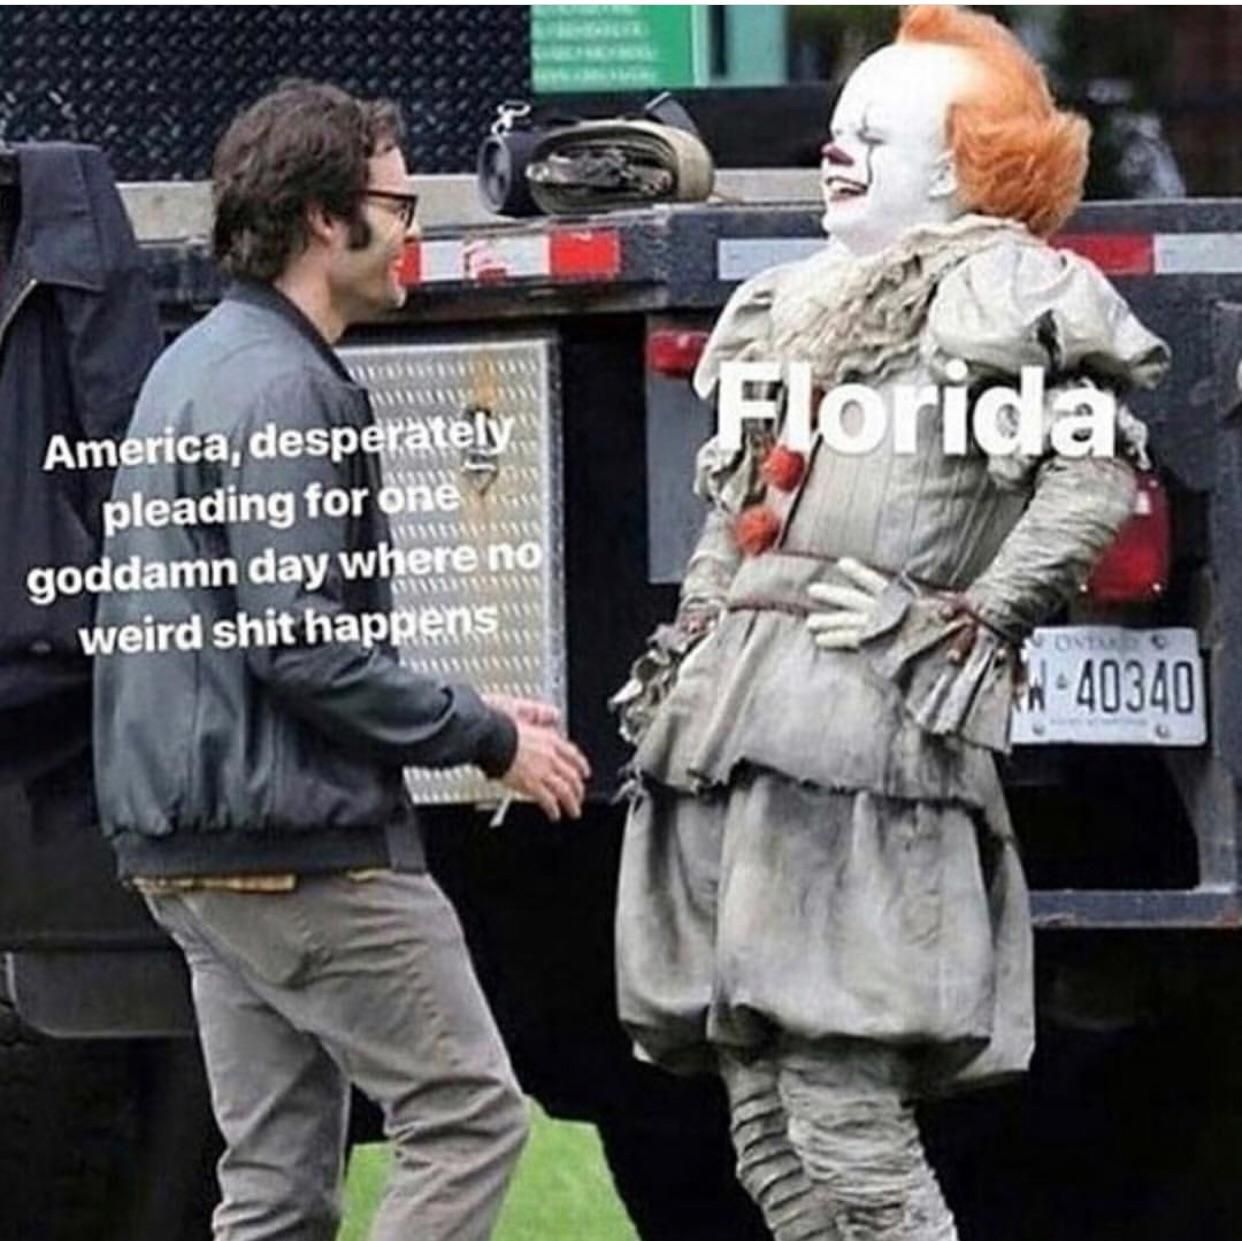 Seriously Florida every single time